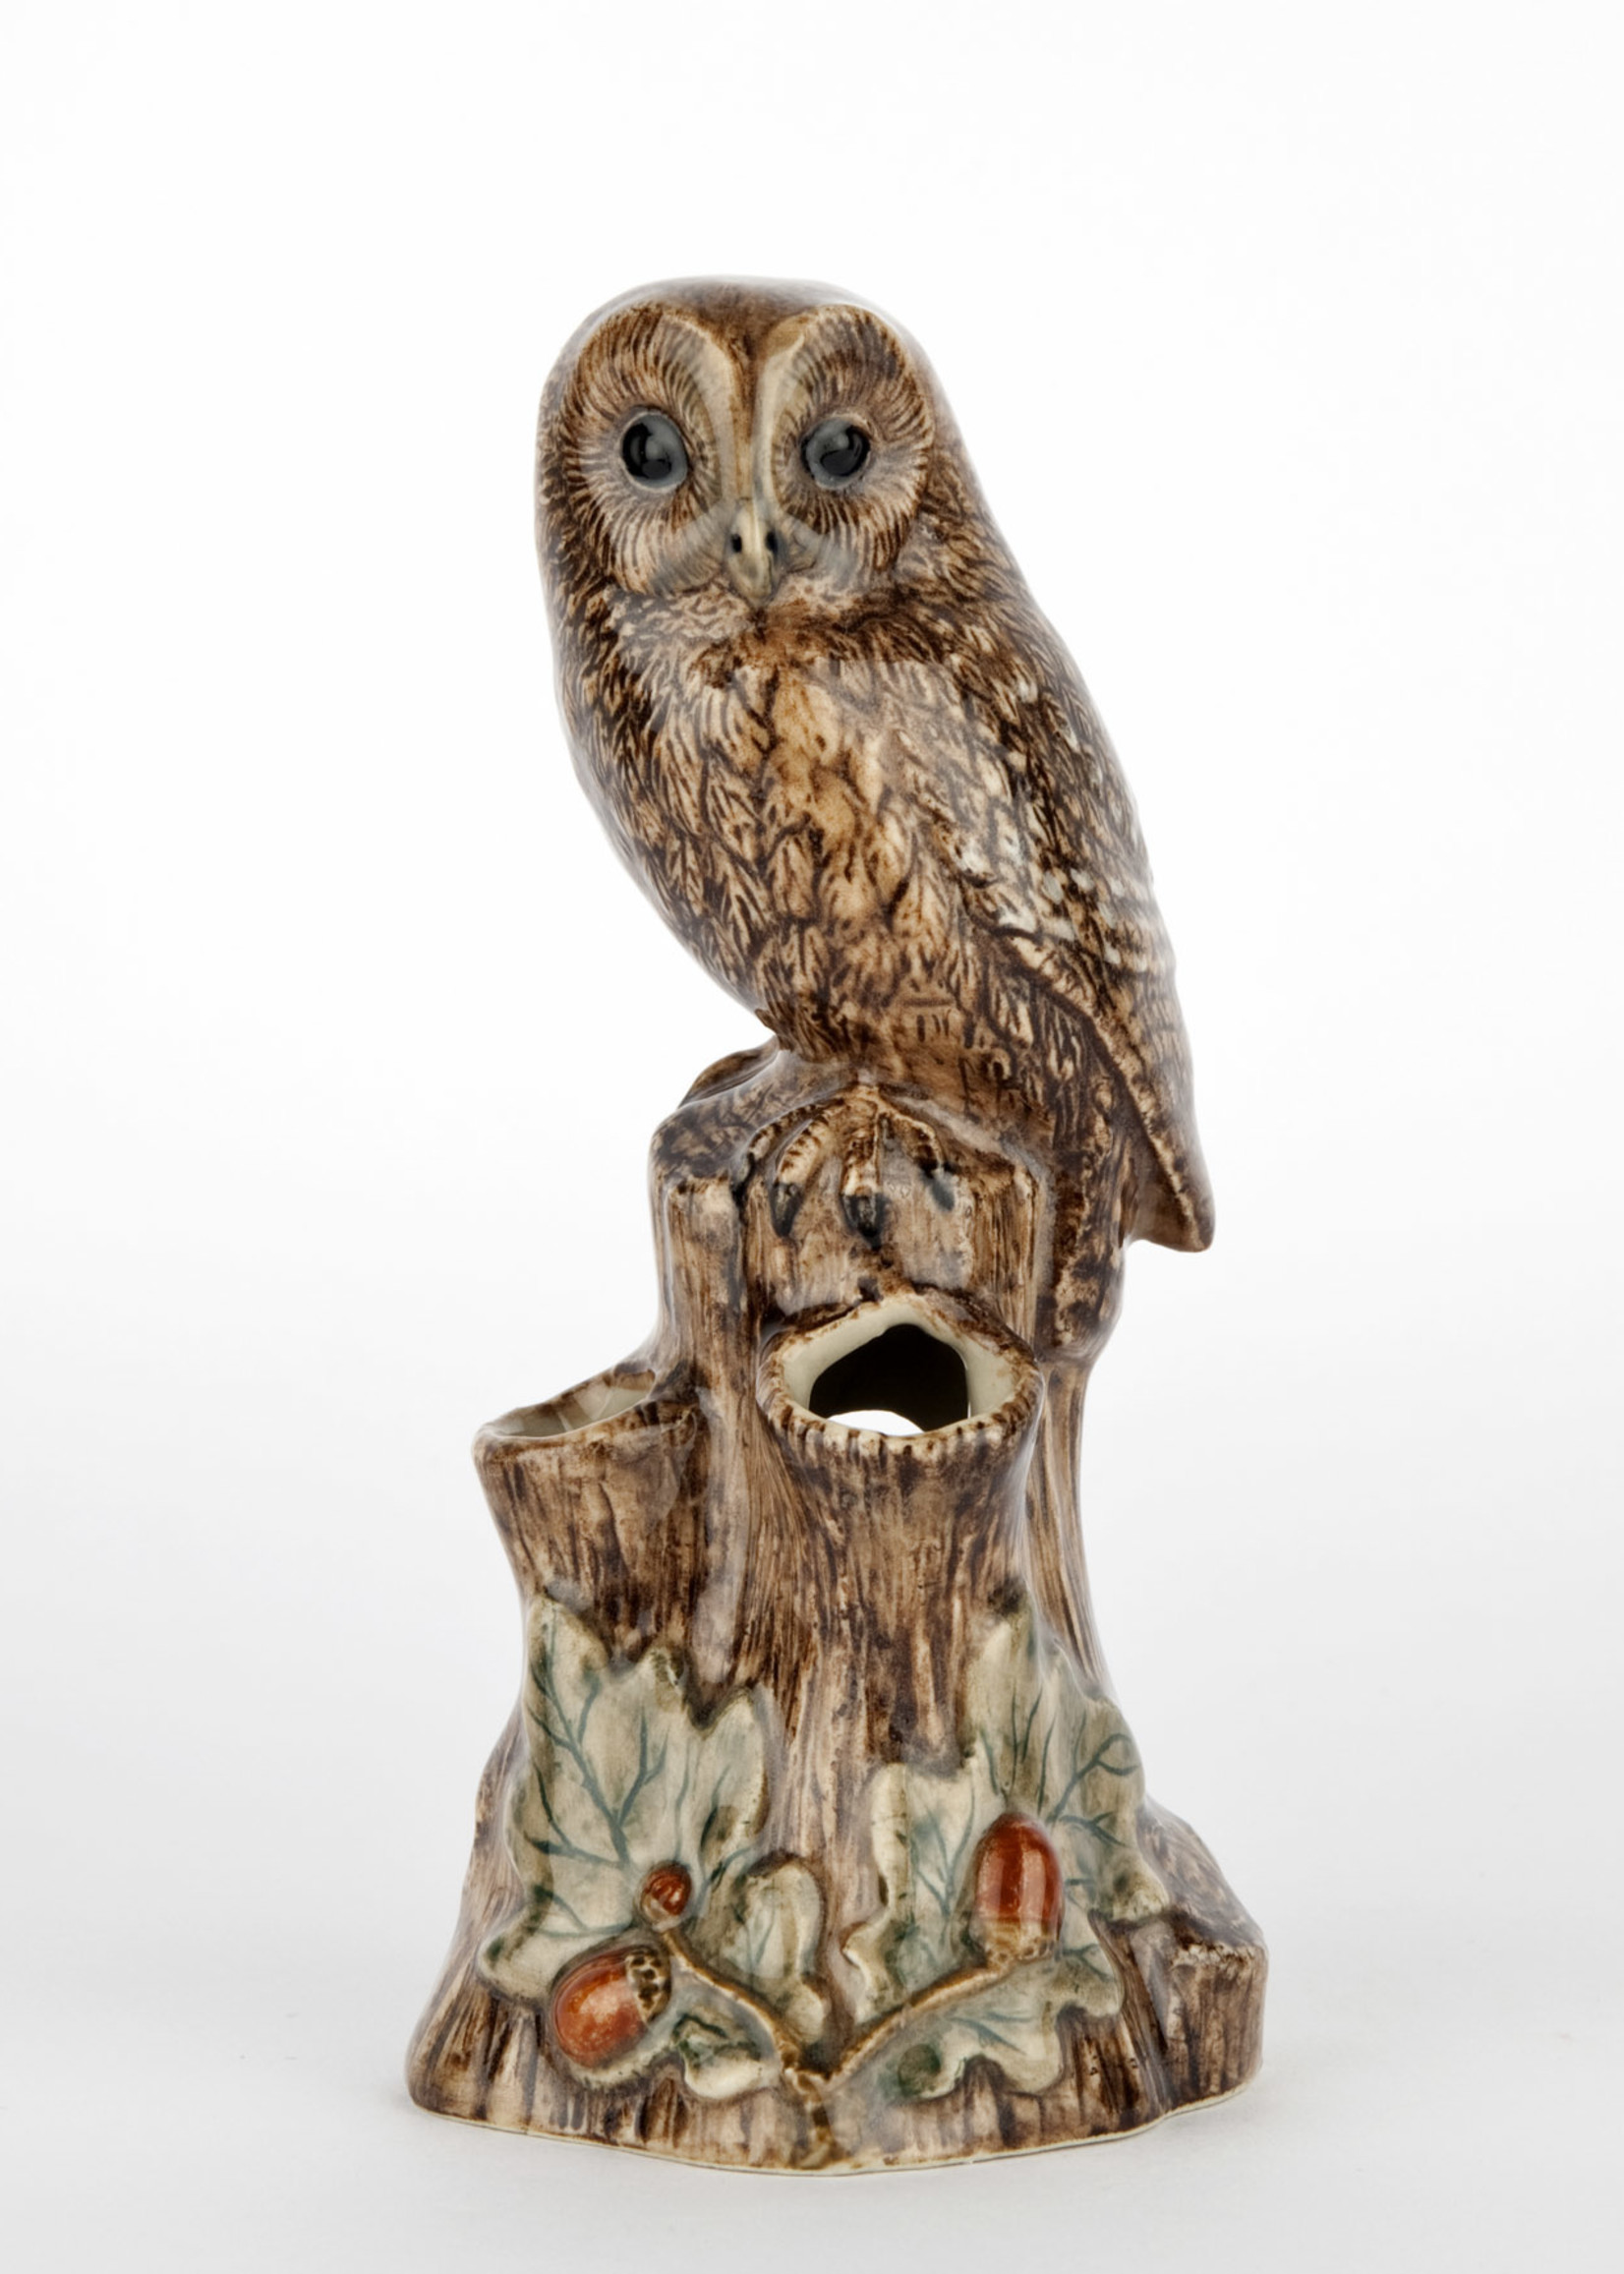 Quail Vaasje BOS UIL tawny owl 13.5cm